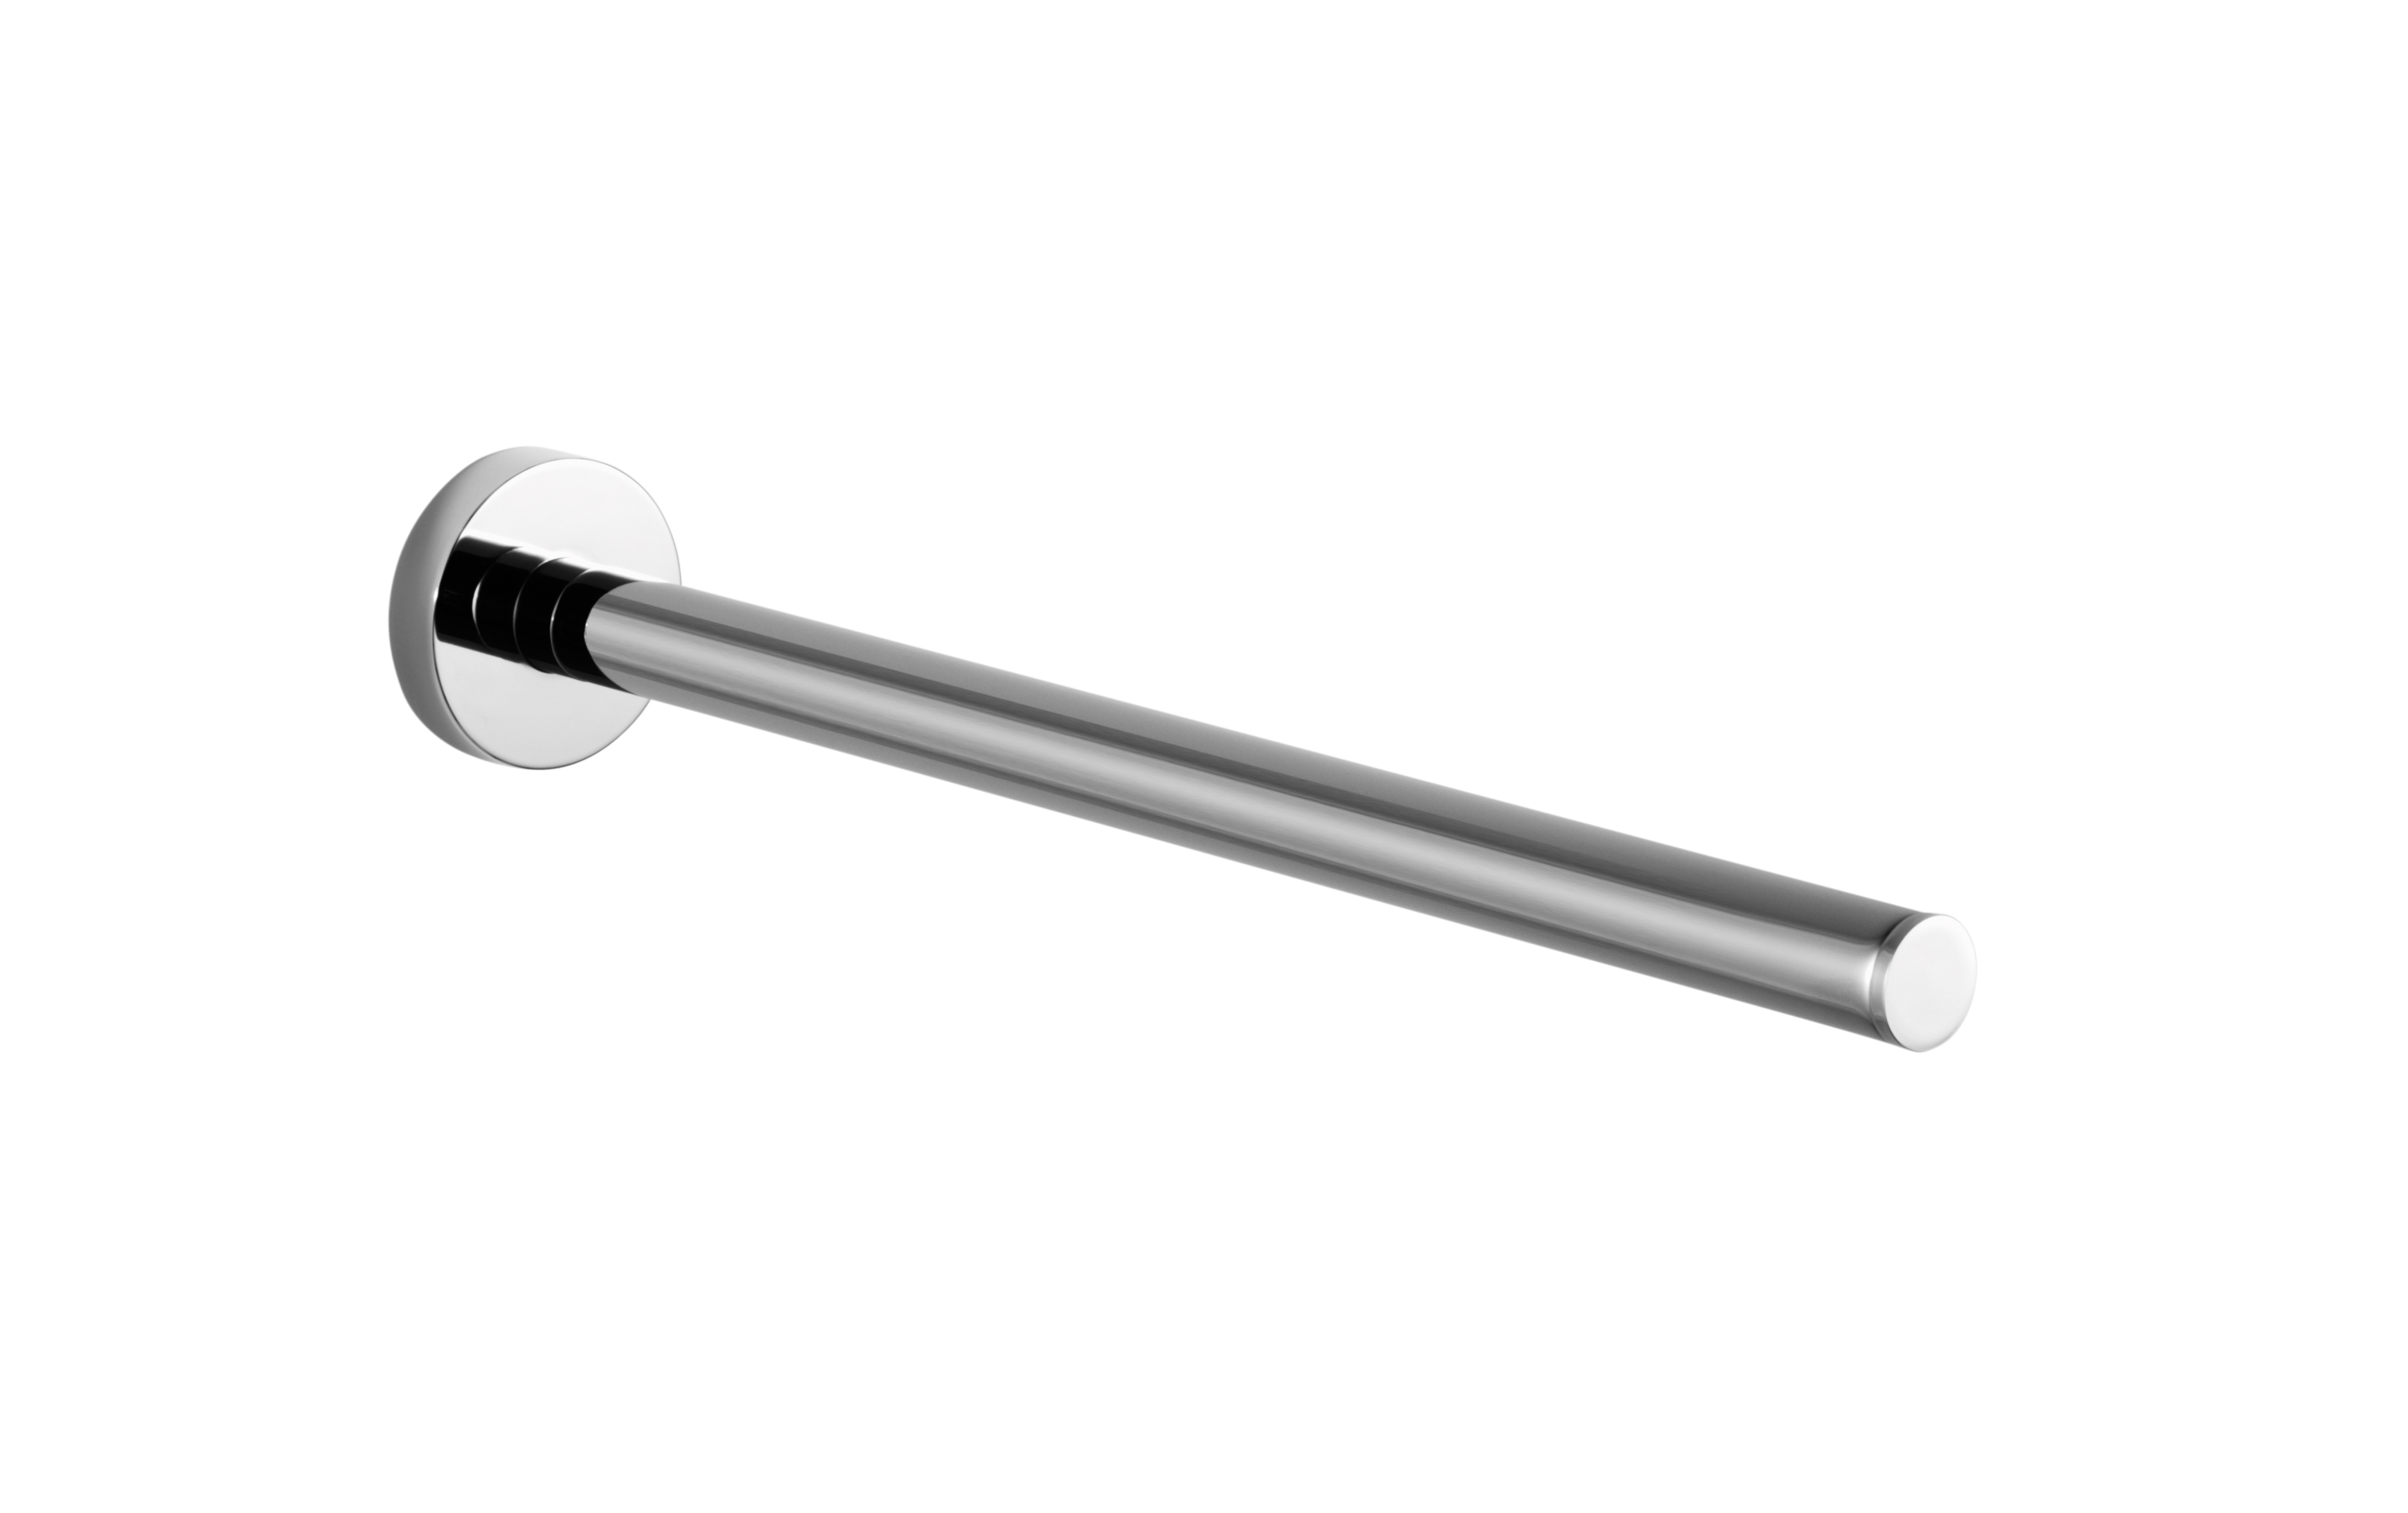 AVENARIUS Handtuchhalter extra stabil
einarmig 325 mm, Serie Univ. 9001415010